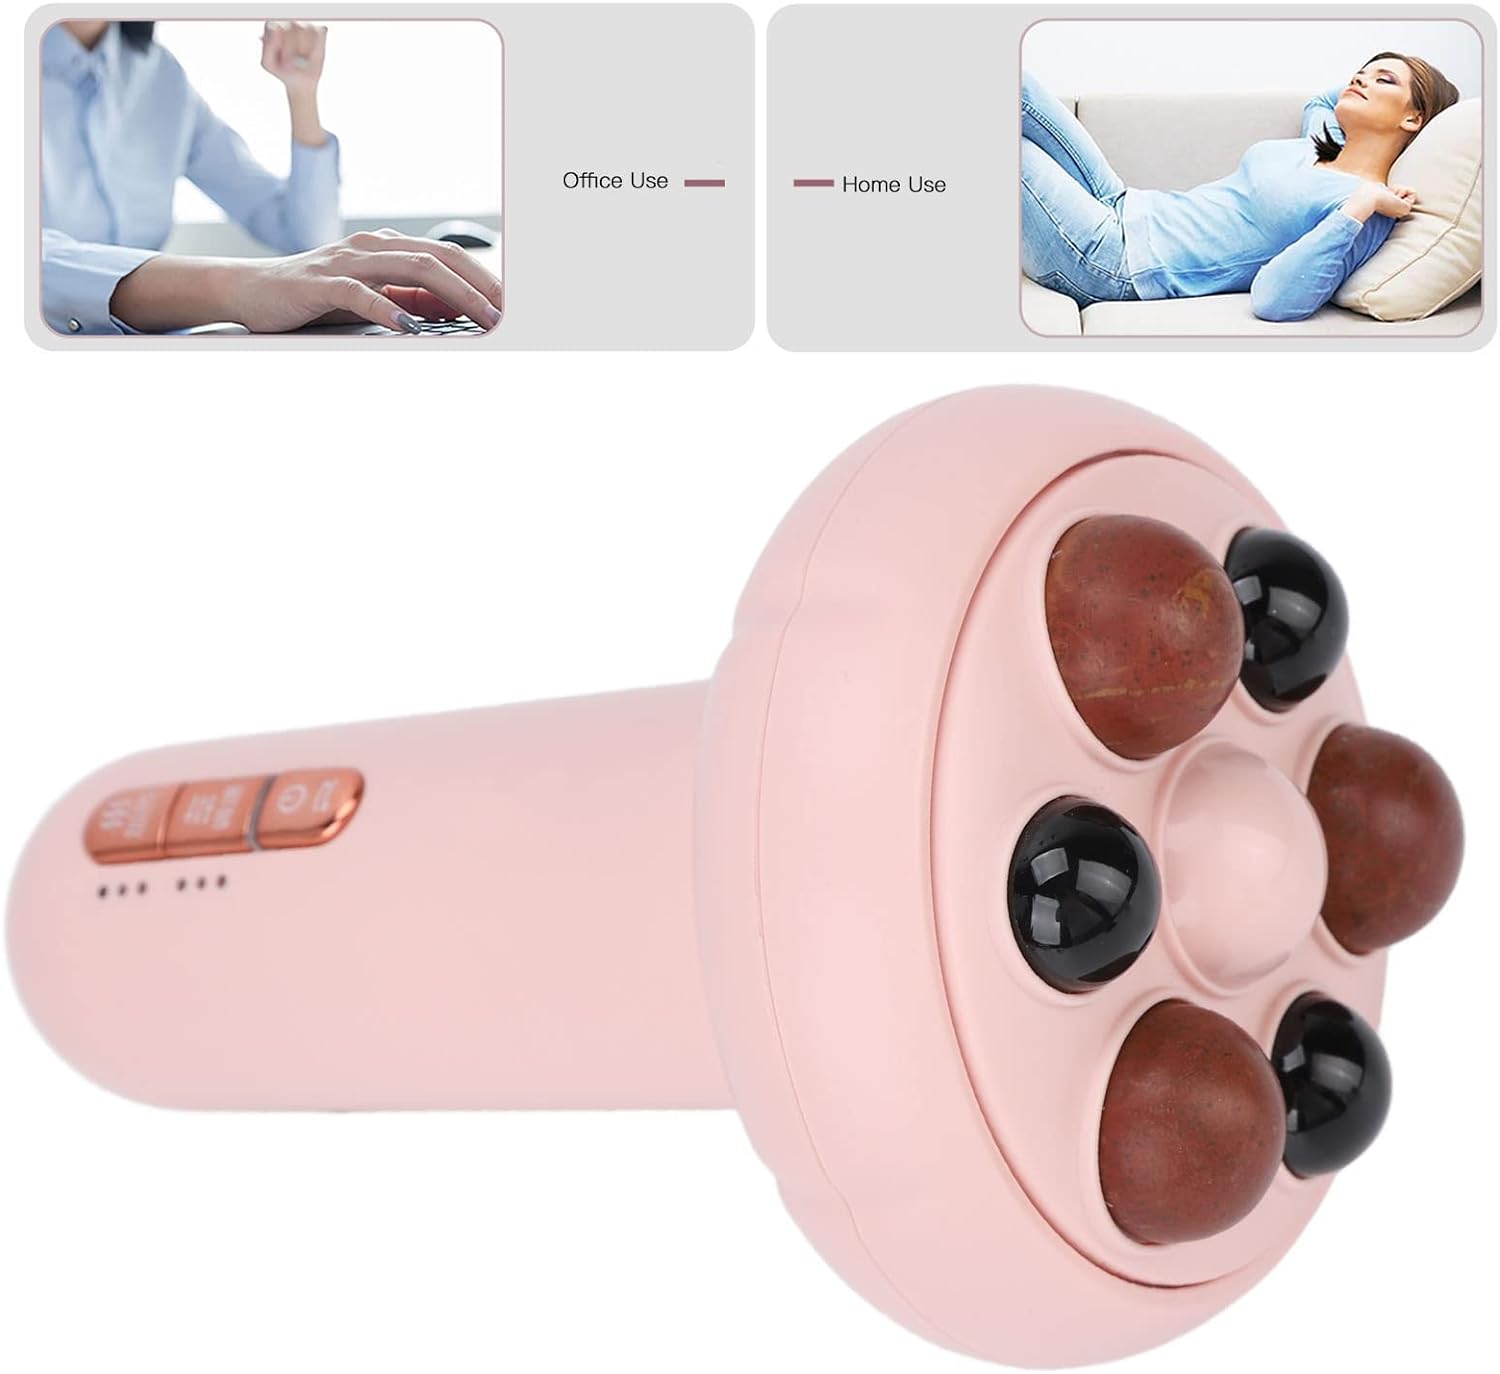 Portable Electric Abdomen Massager - Home Essentials Store